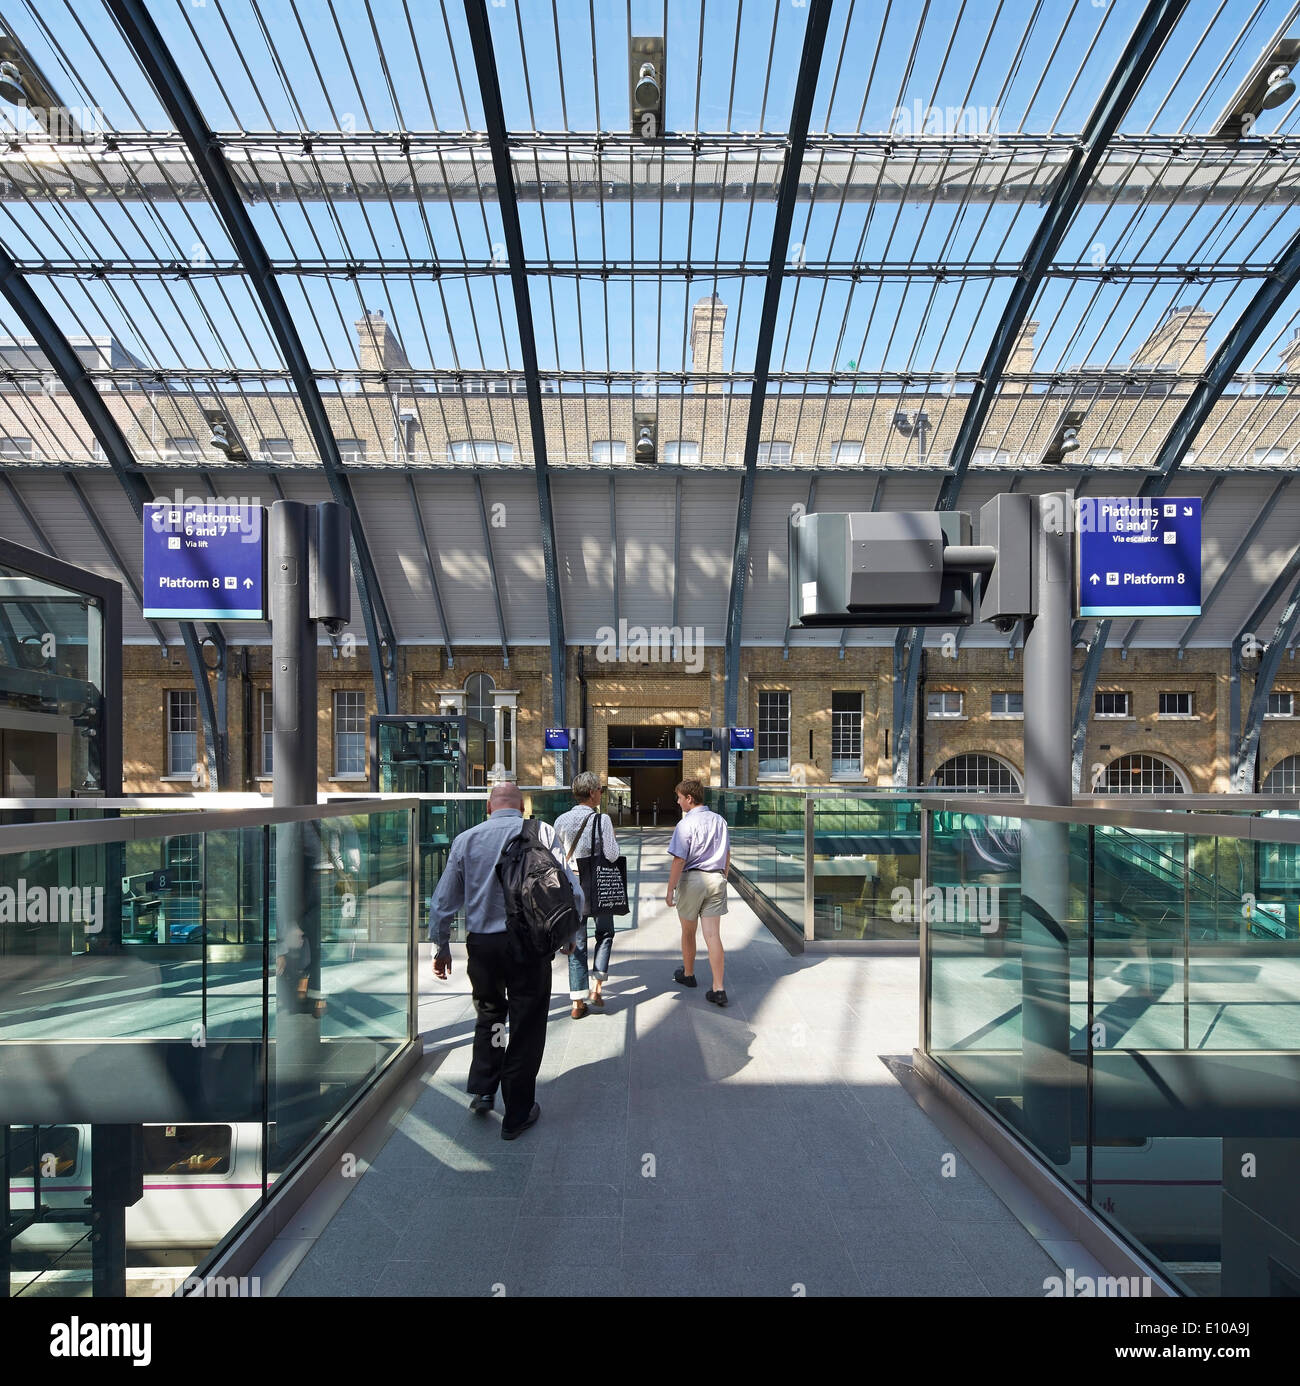 King's Cross trainshed, London, United Kingdom. Architect: Network Rail, 2013. Elevated linking walkways under glass roof. Stock Photo